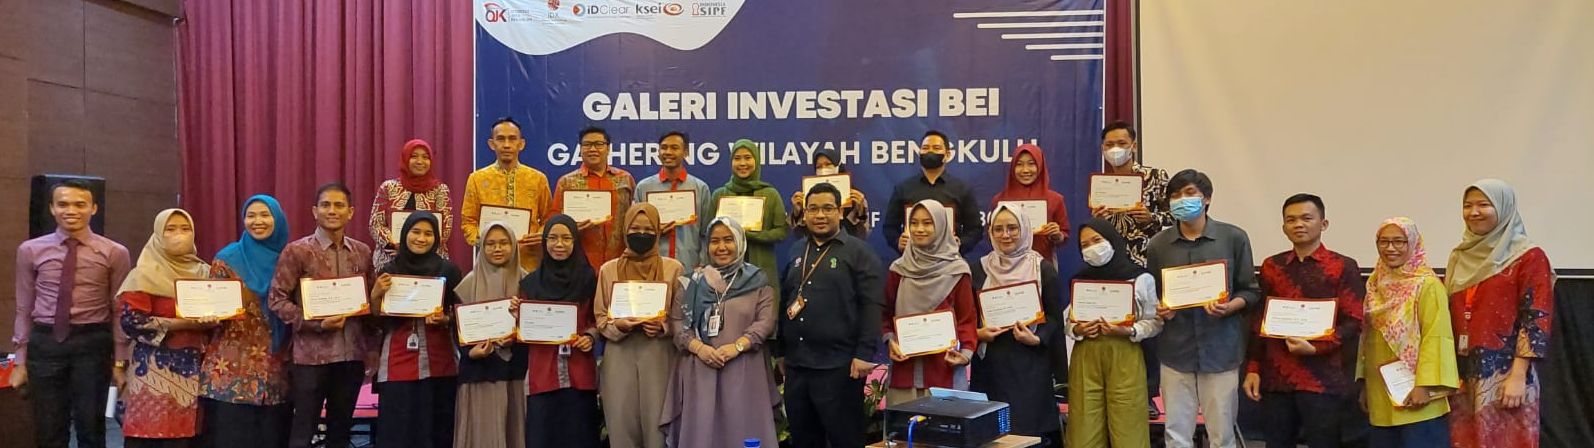 BEI Bengkulu juga memberikan penghargaan kepada 25 pengajar aktif dari anggota Galeri Investasi BEI/ Fotgo: Iyud/ikobengkulu.com/